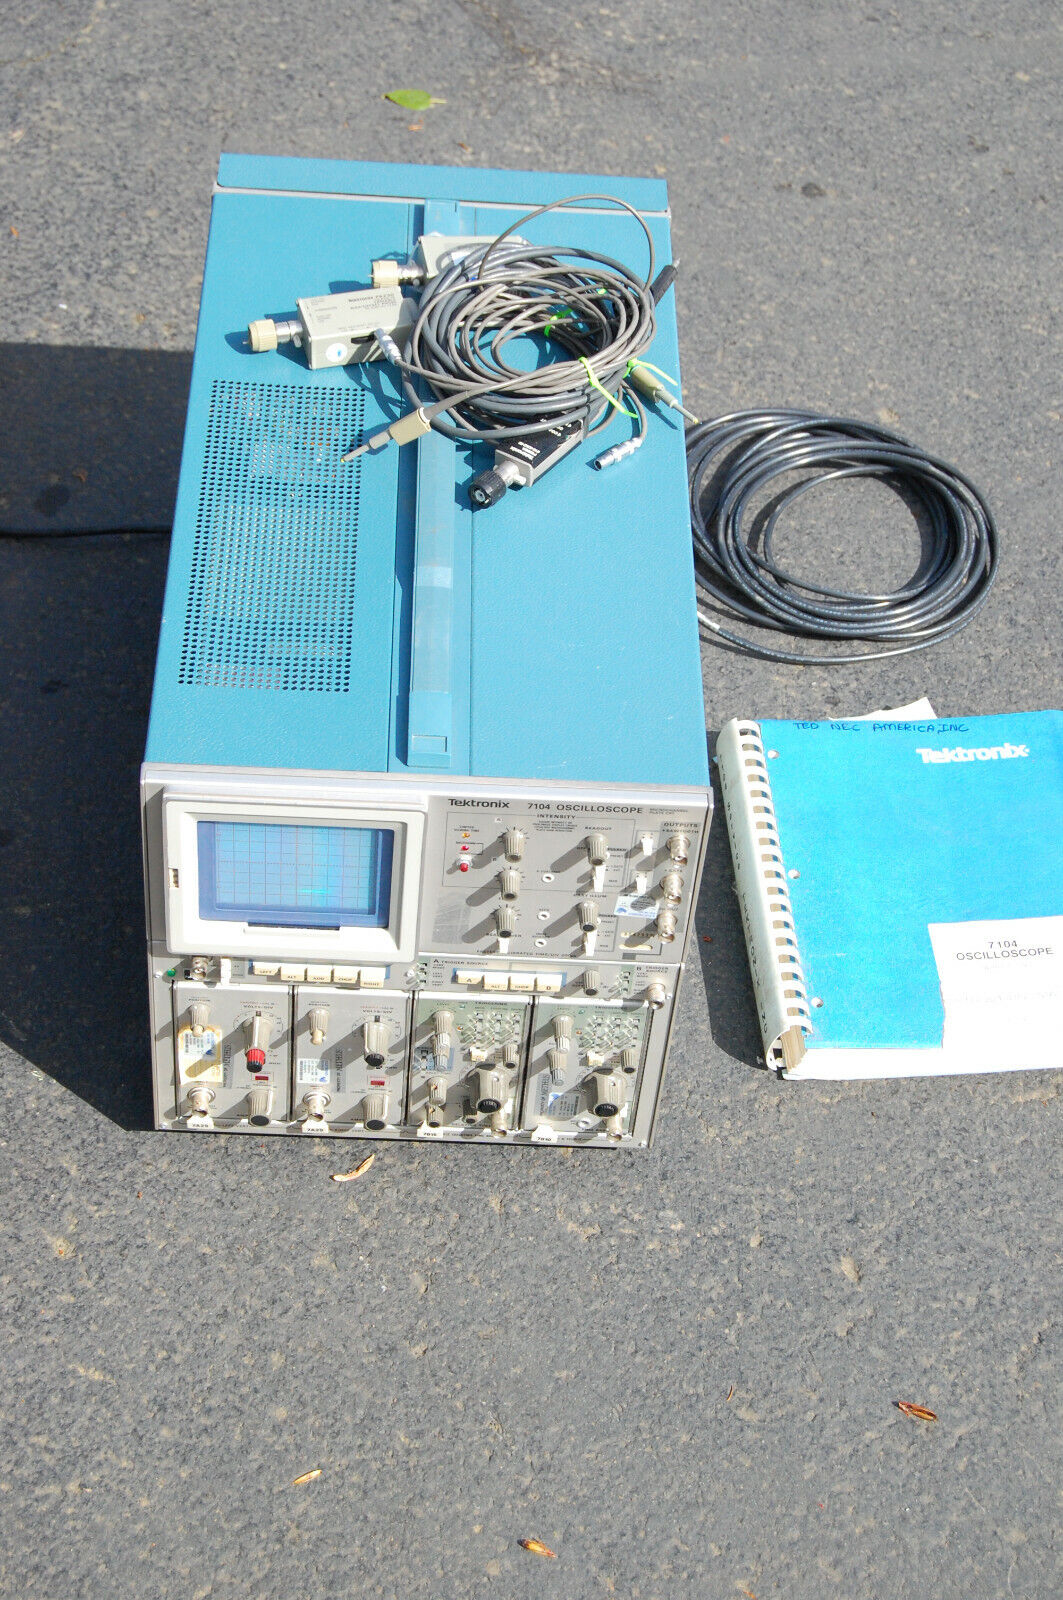 Tektronix 7104 Oscilloscope w/manual and probes